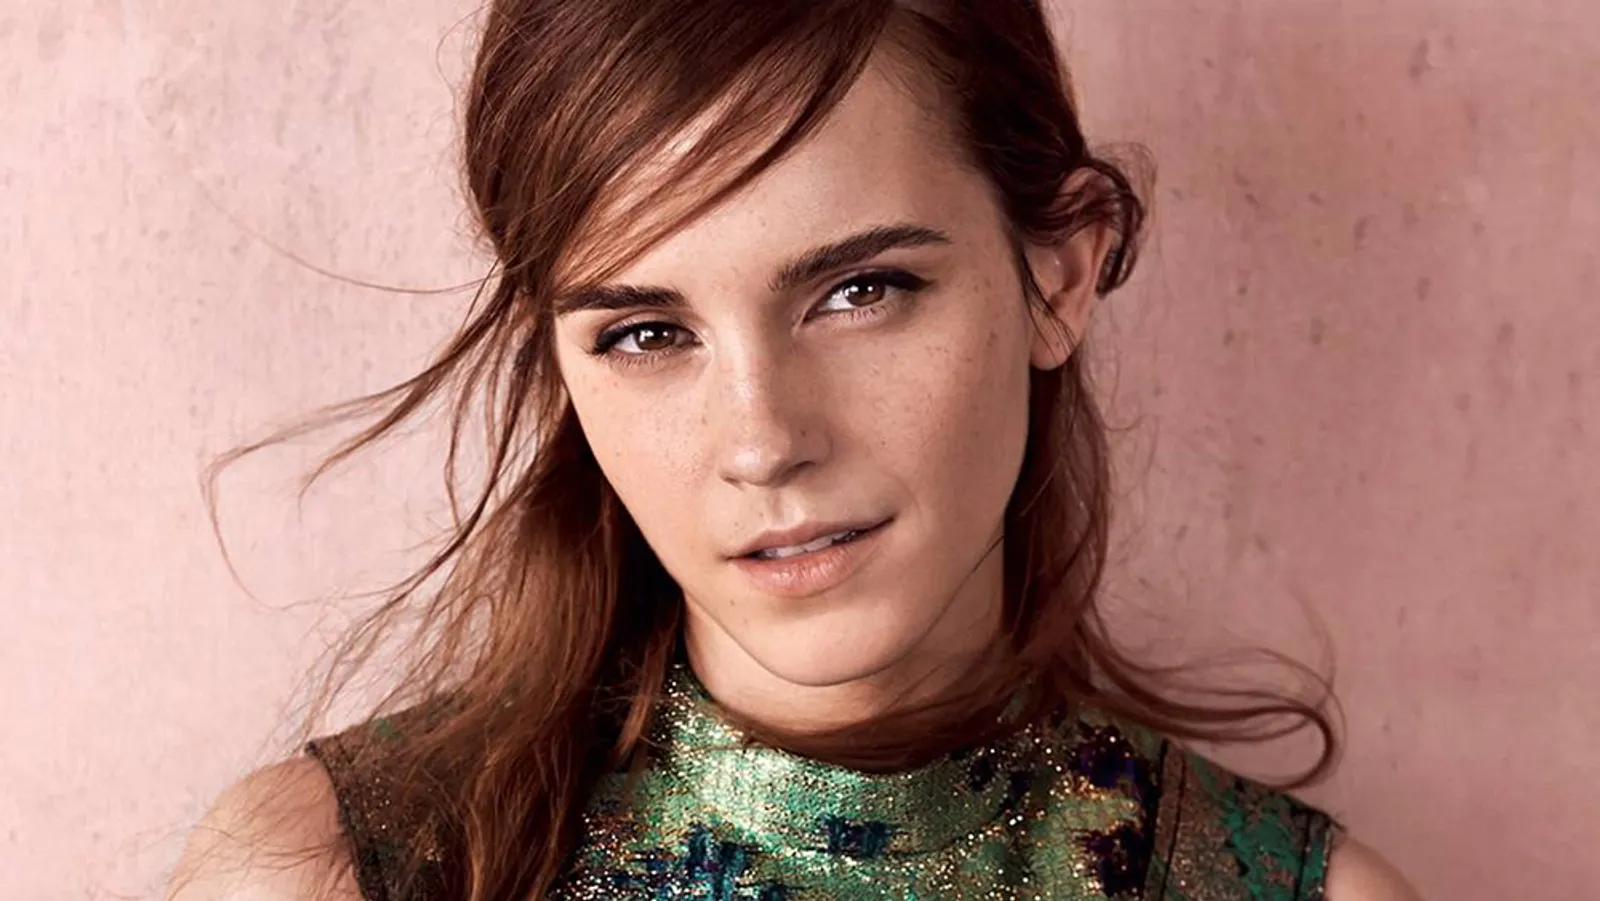 Perjalanan Emma Watson sebagai Duta Besar PBB untuk Kesetaraan Gender